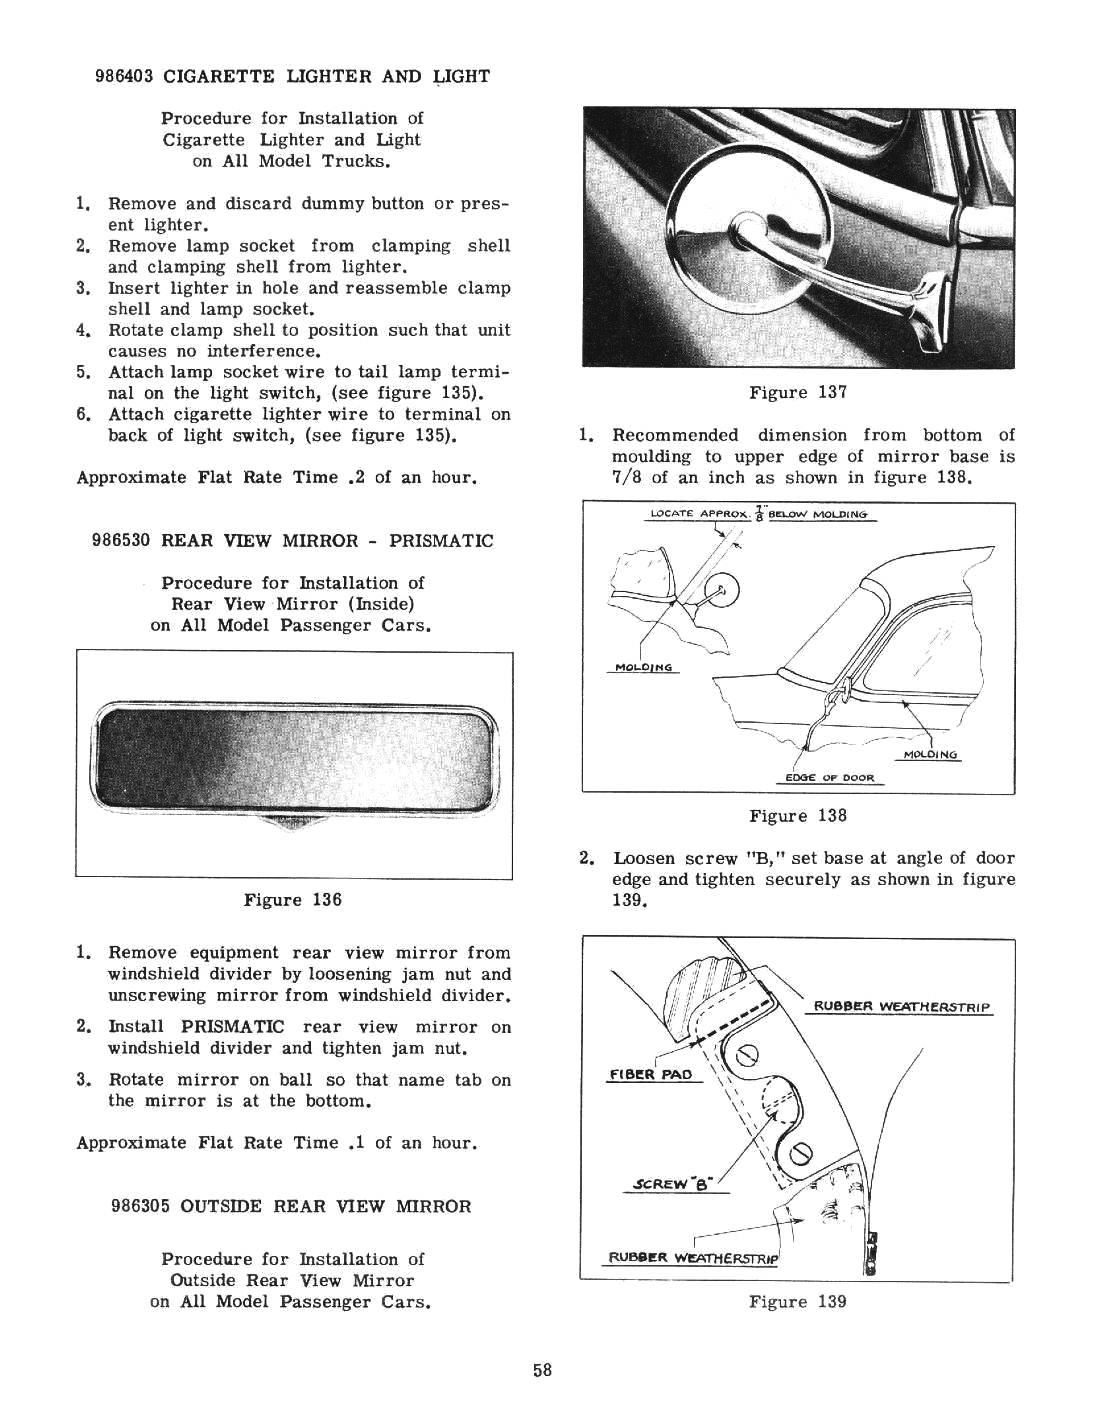 1951_Chevrolet_Acc_Manual-58